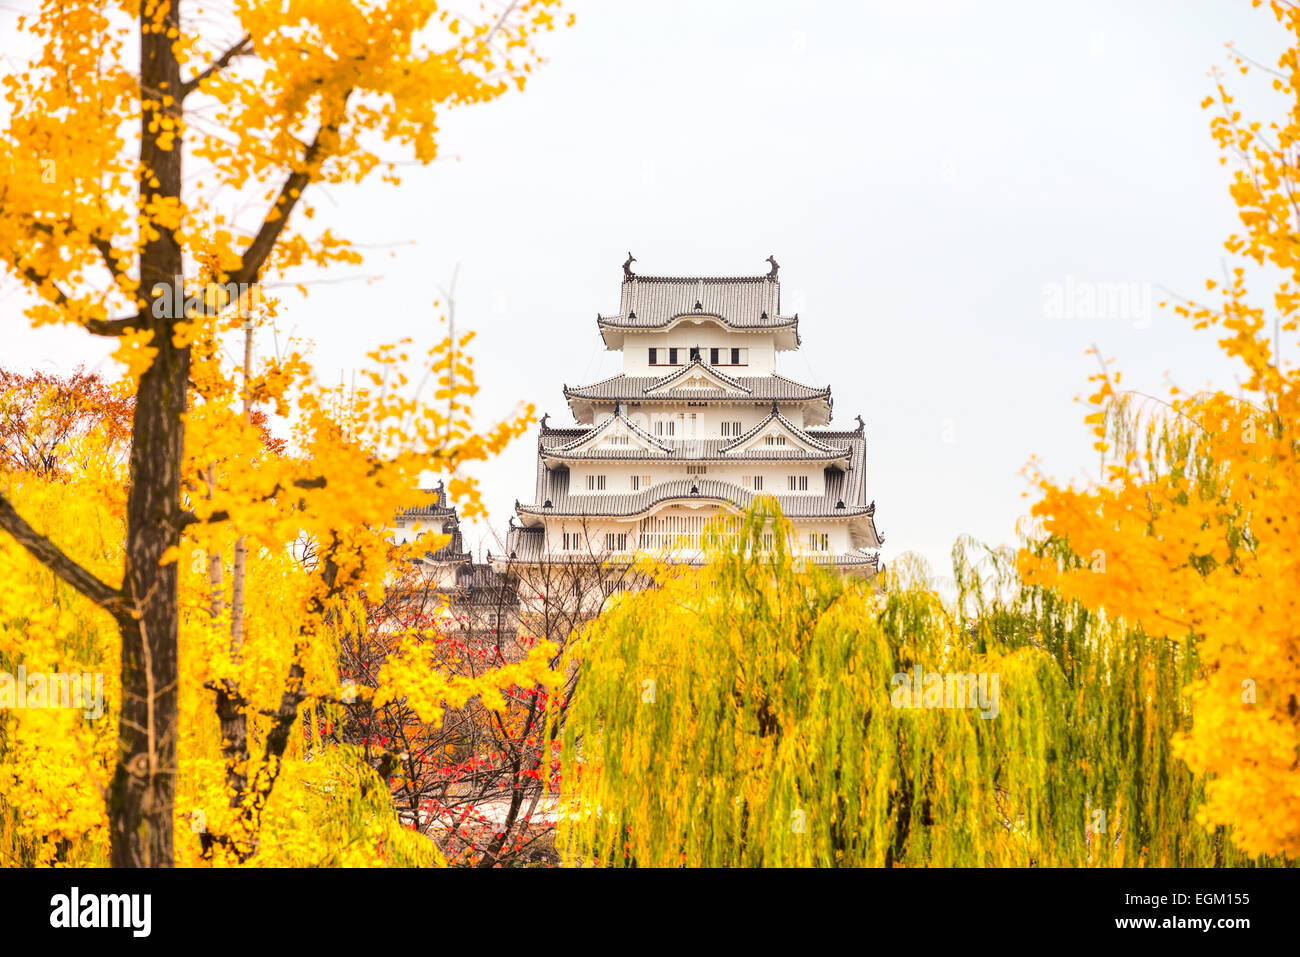 Himeji Castle, also called White Heron Castle, in autumn season, Japan. Stock Photo